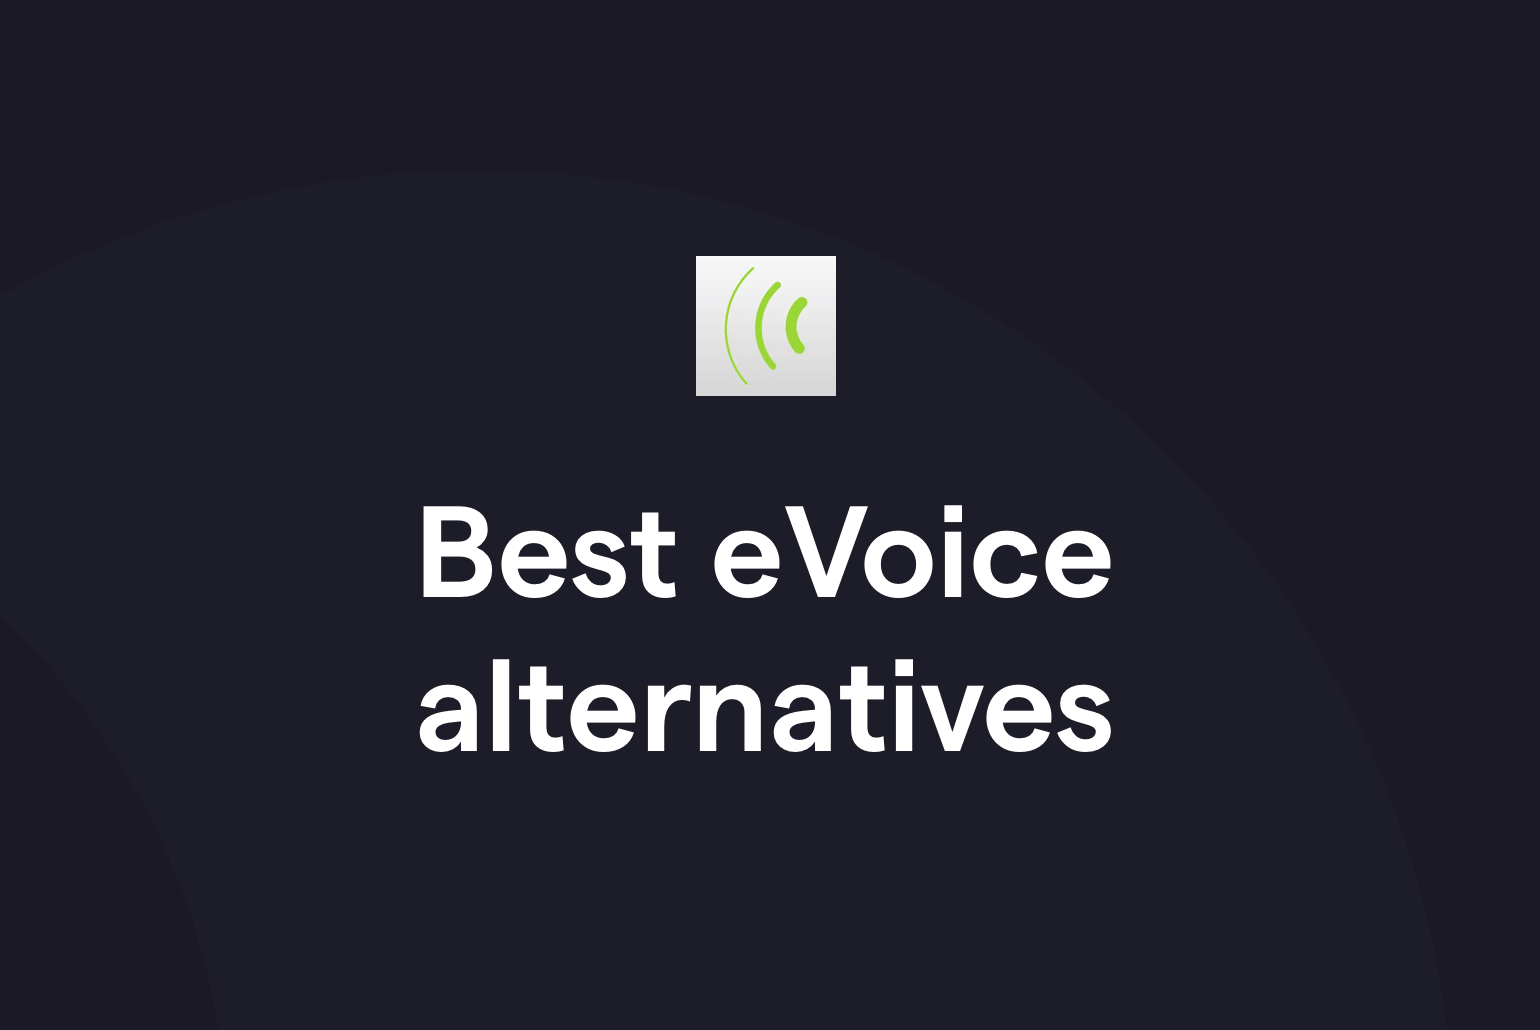 eVoice alternatives